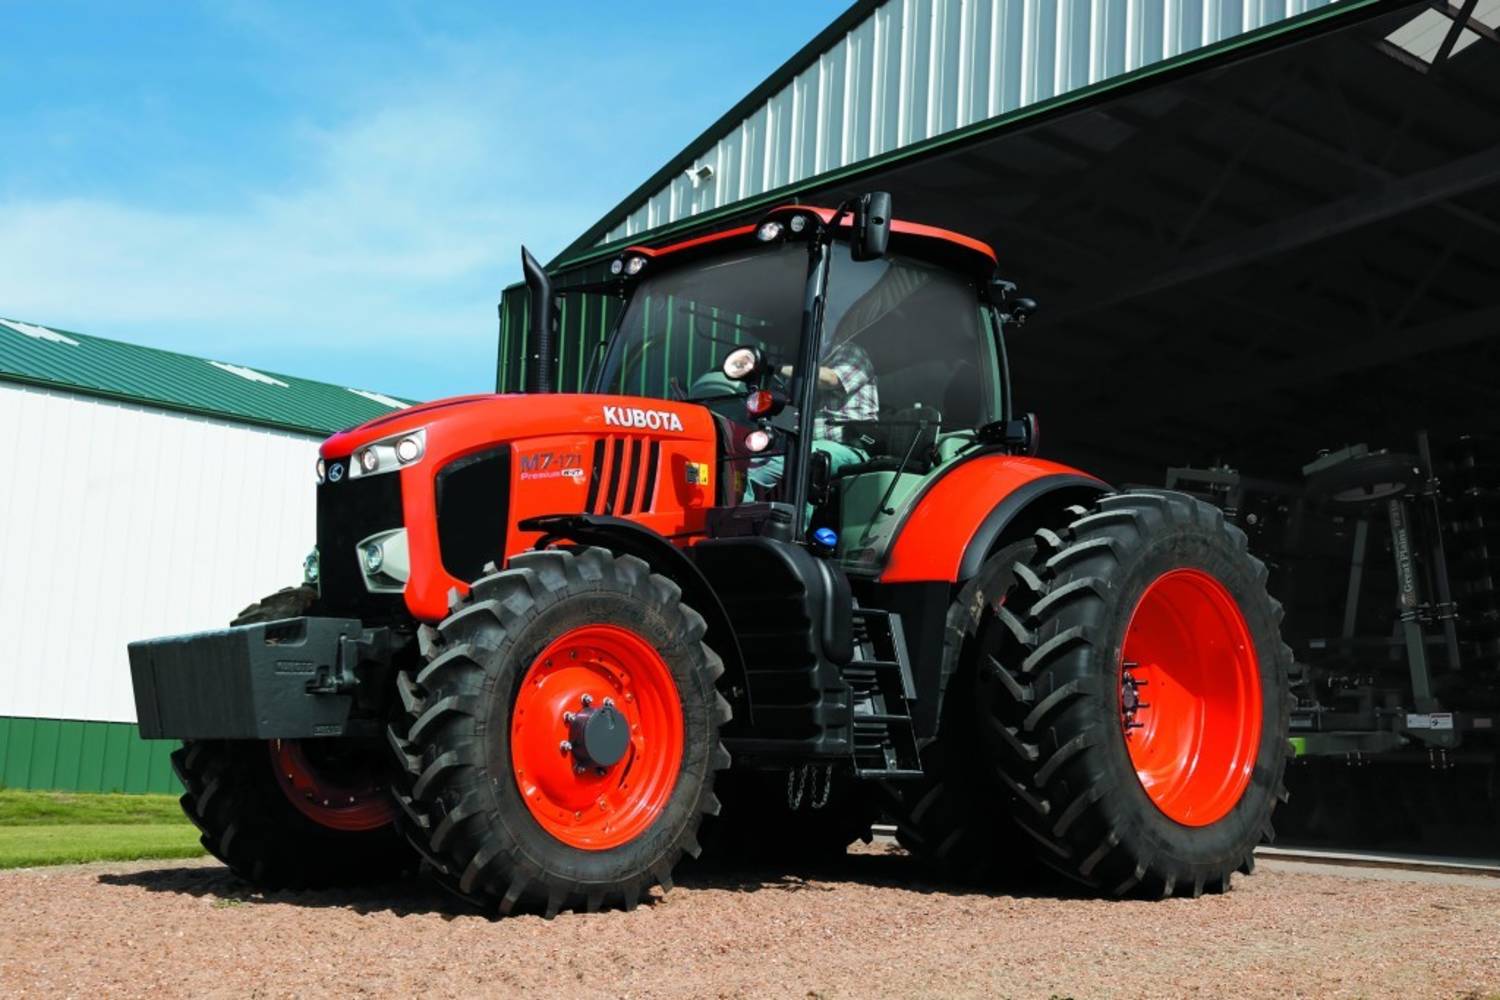 Image of a Kubota M7 series tractor.